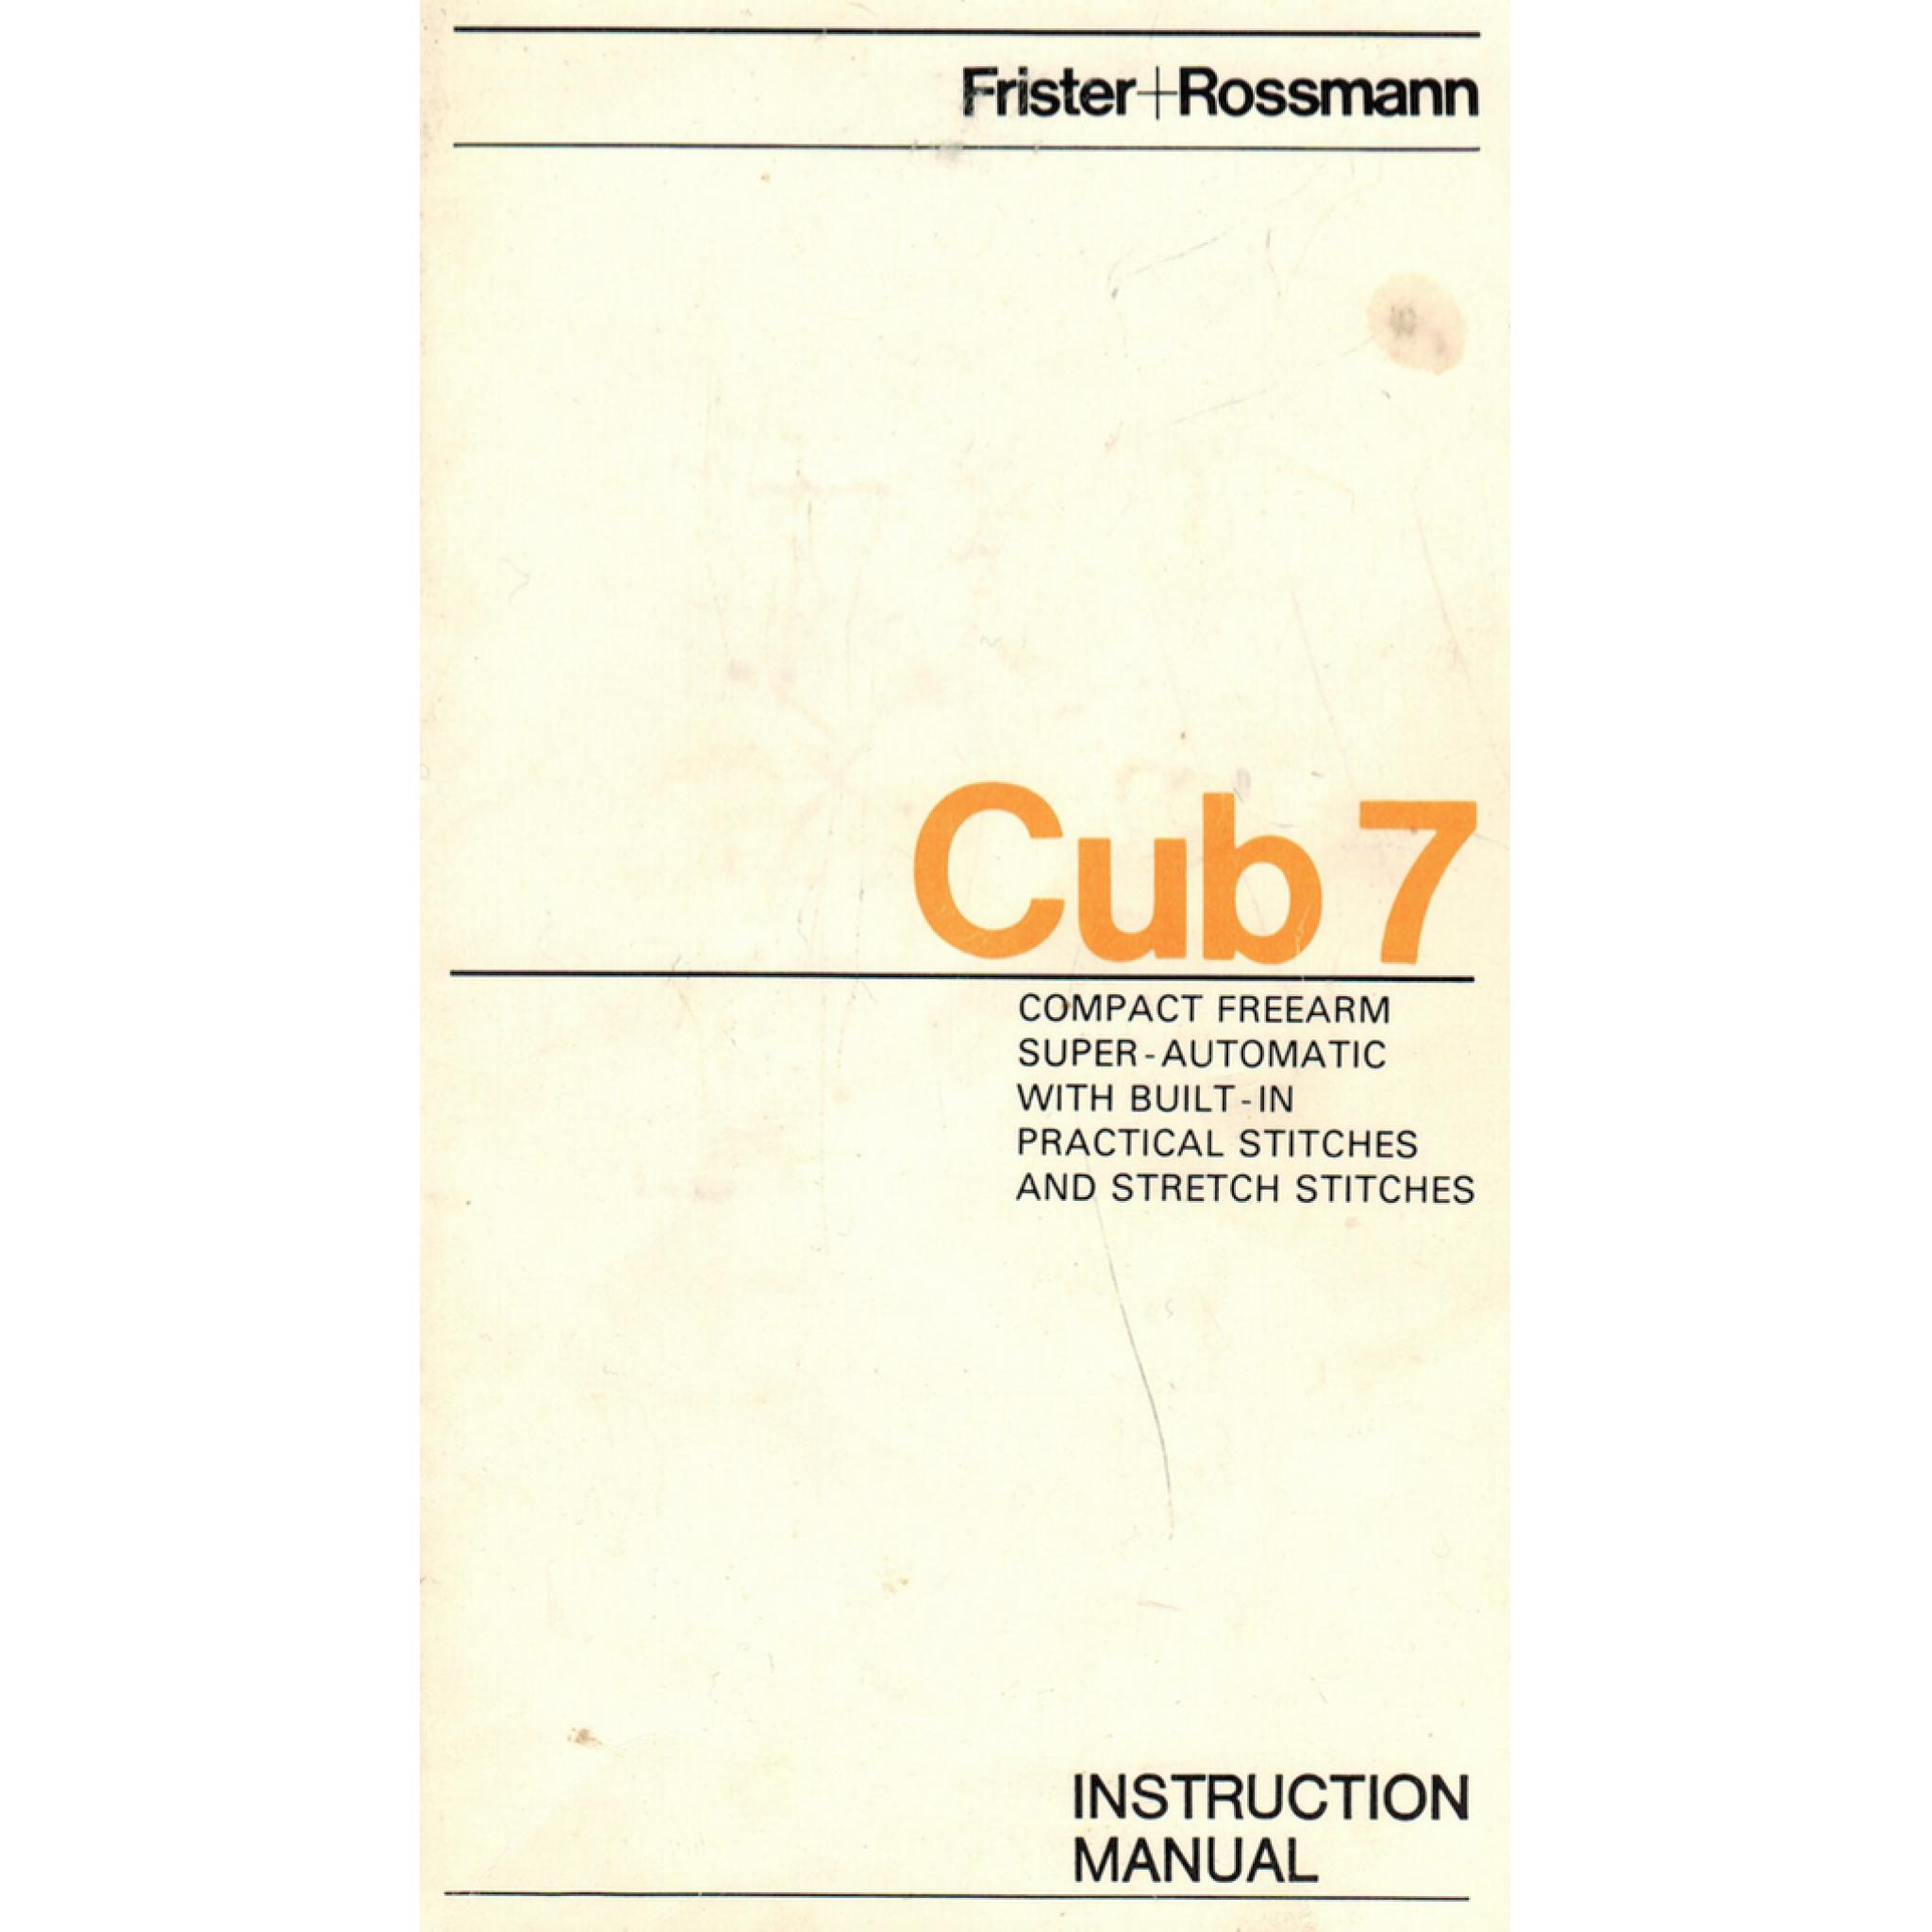 frister rossmann manual cub 4